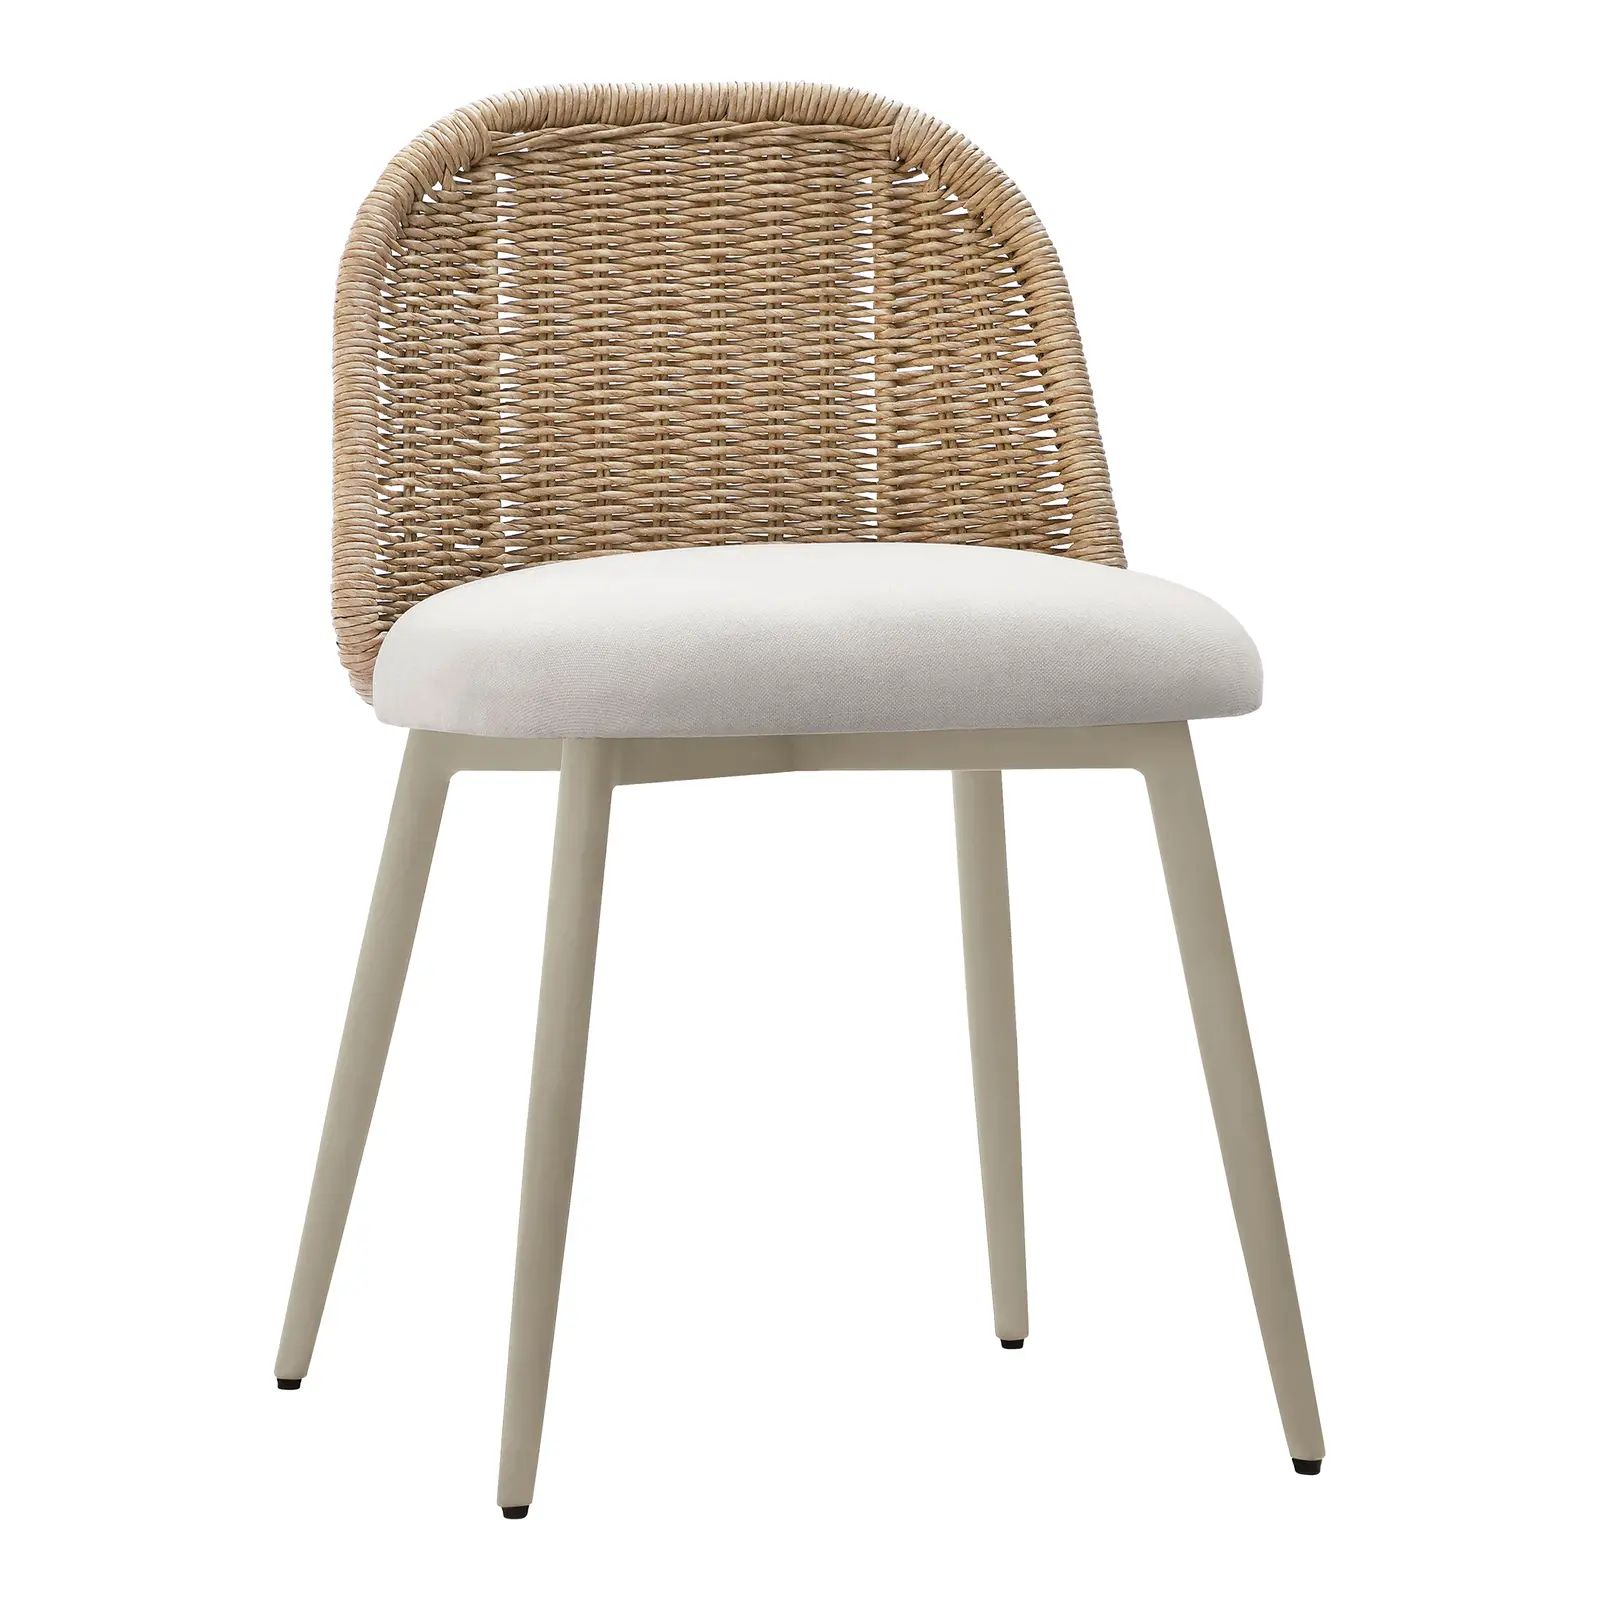 Alexa Wicker Outdoor Dining Chair, Cream | Chairish